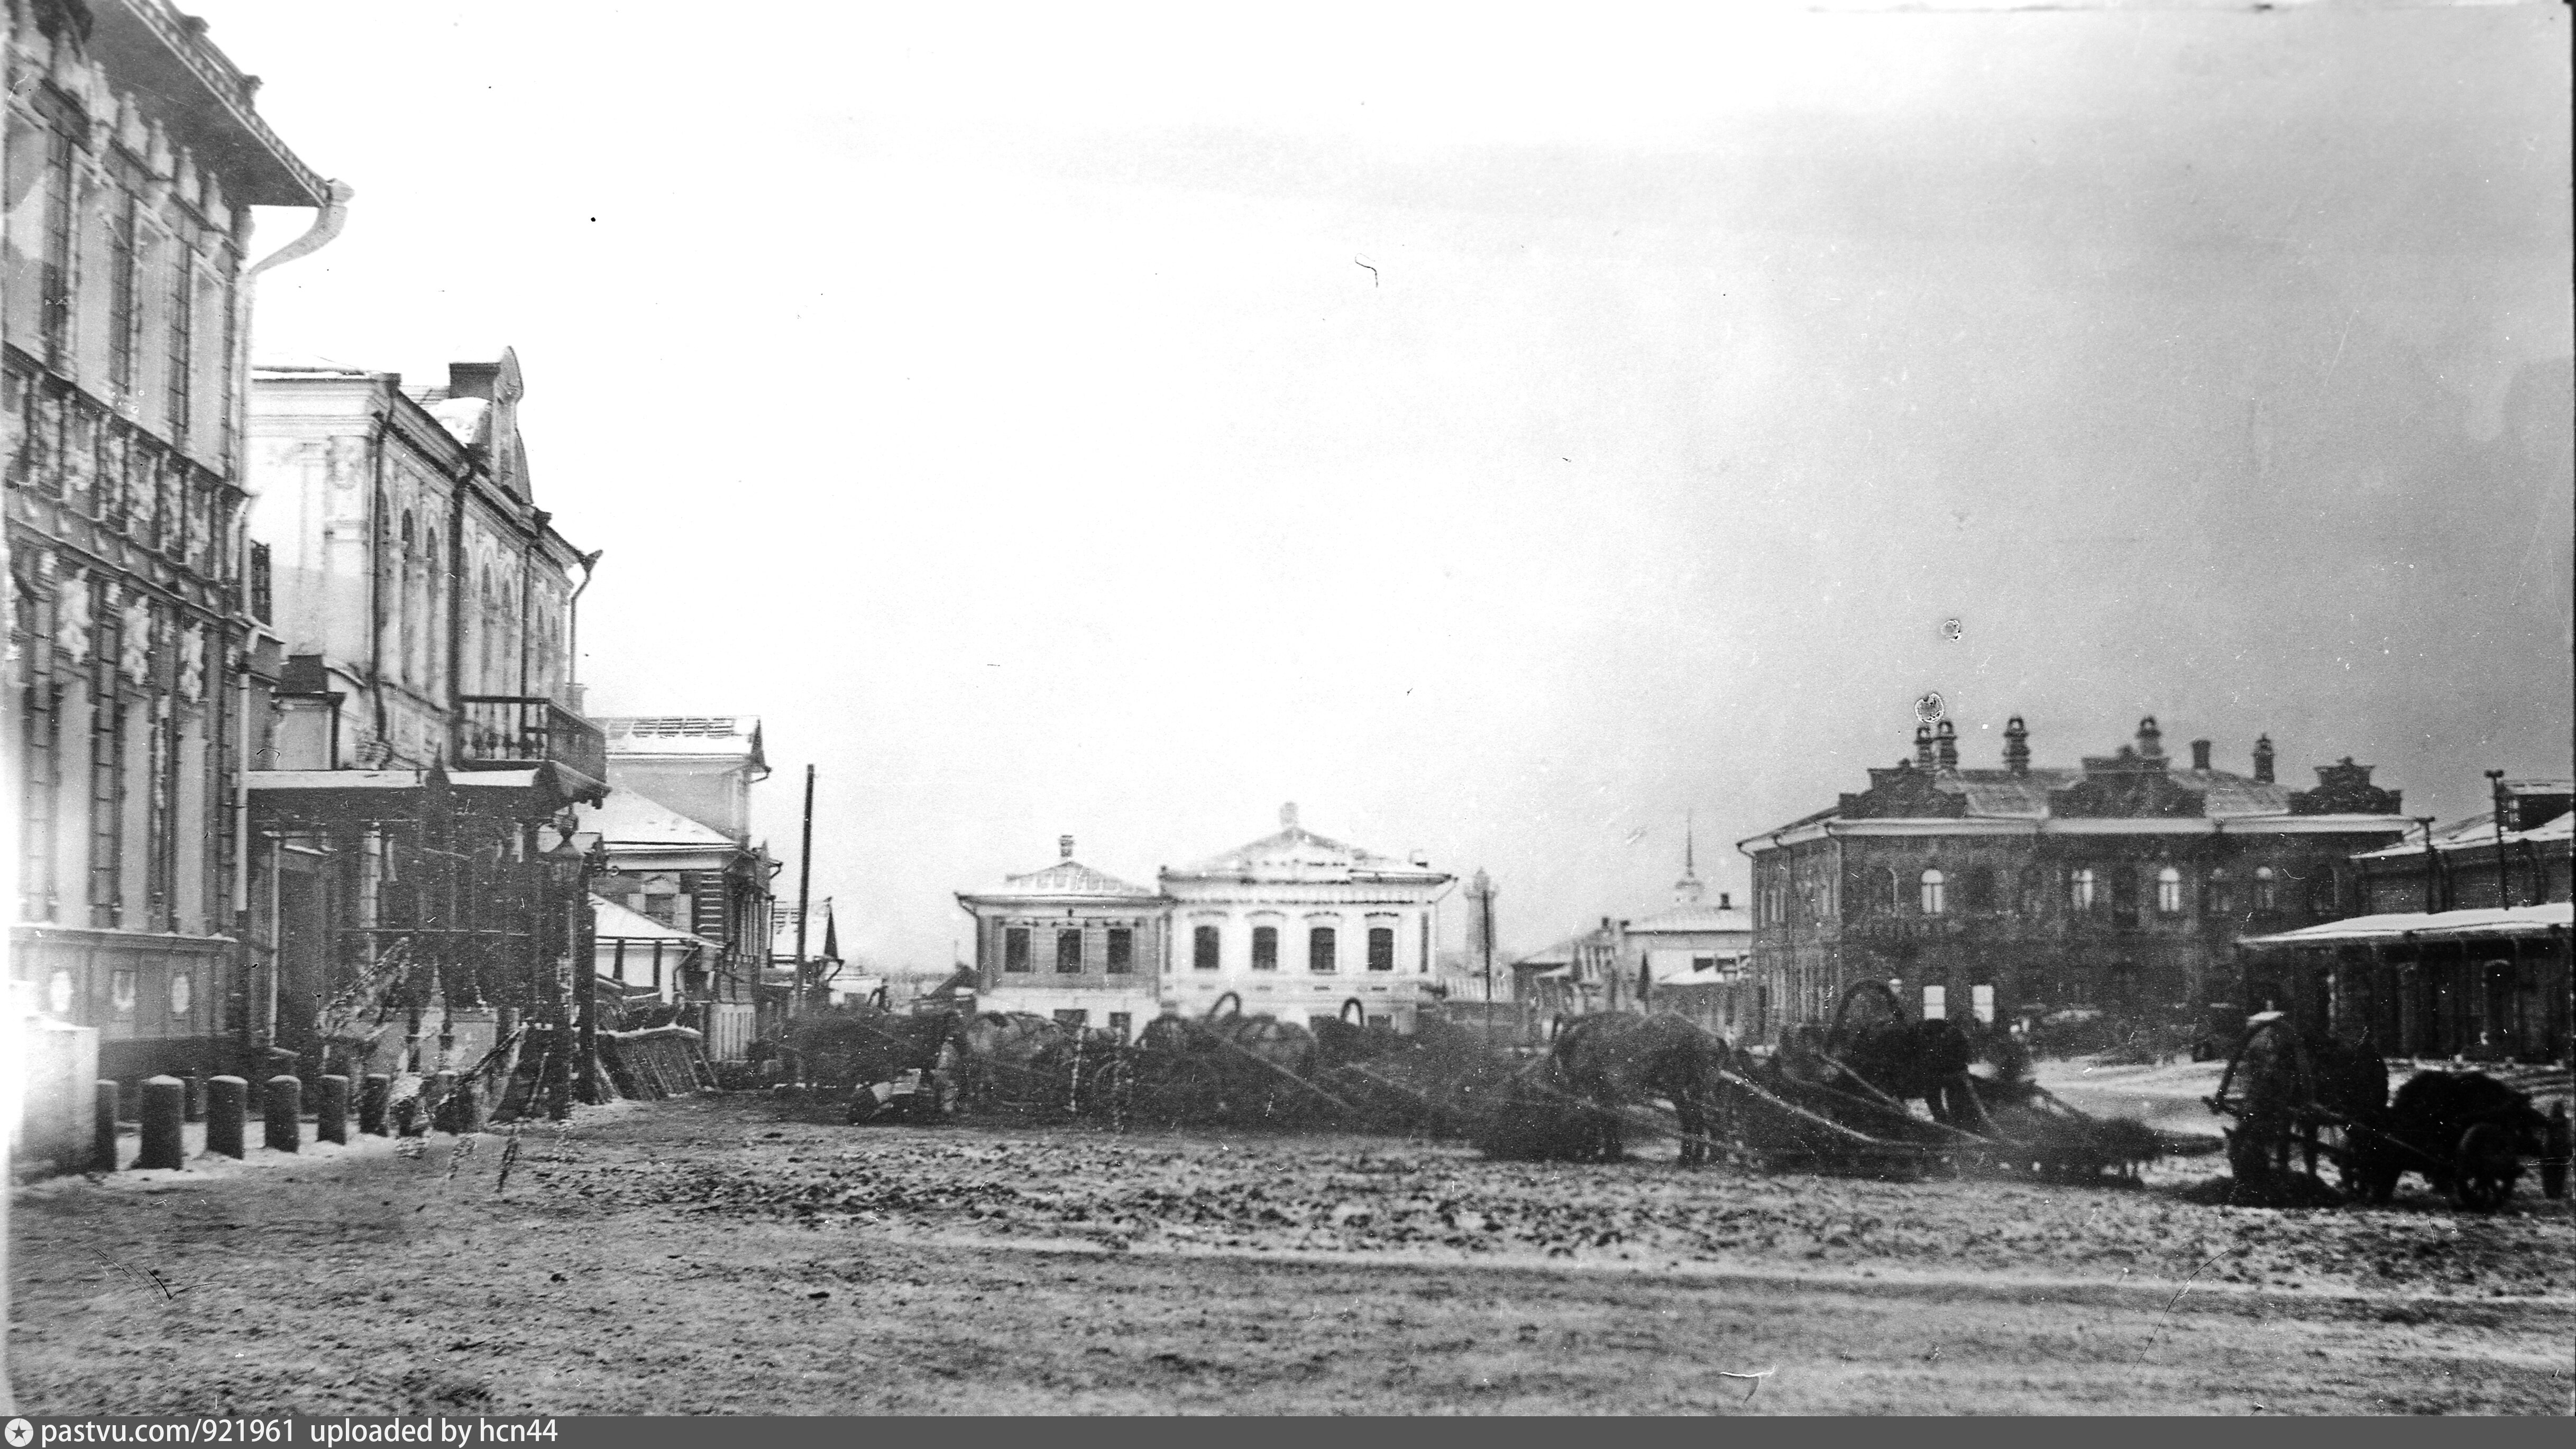 Белгород 19 век фото